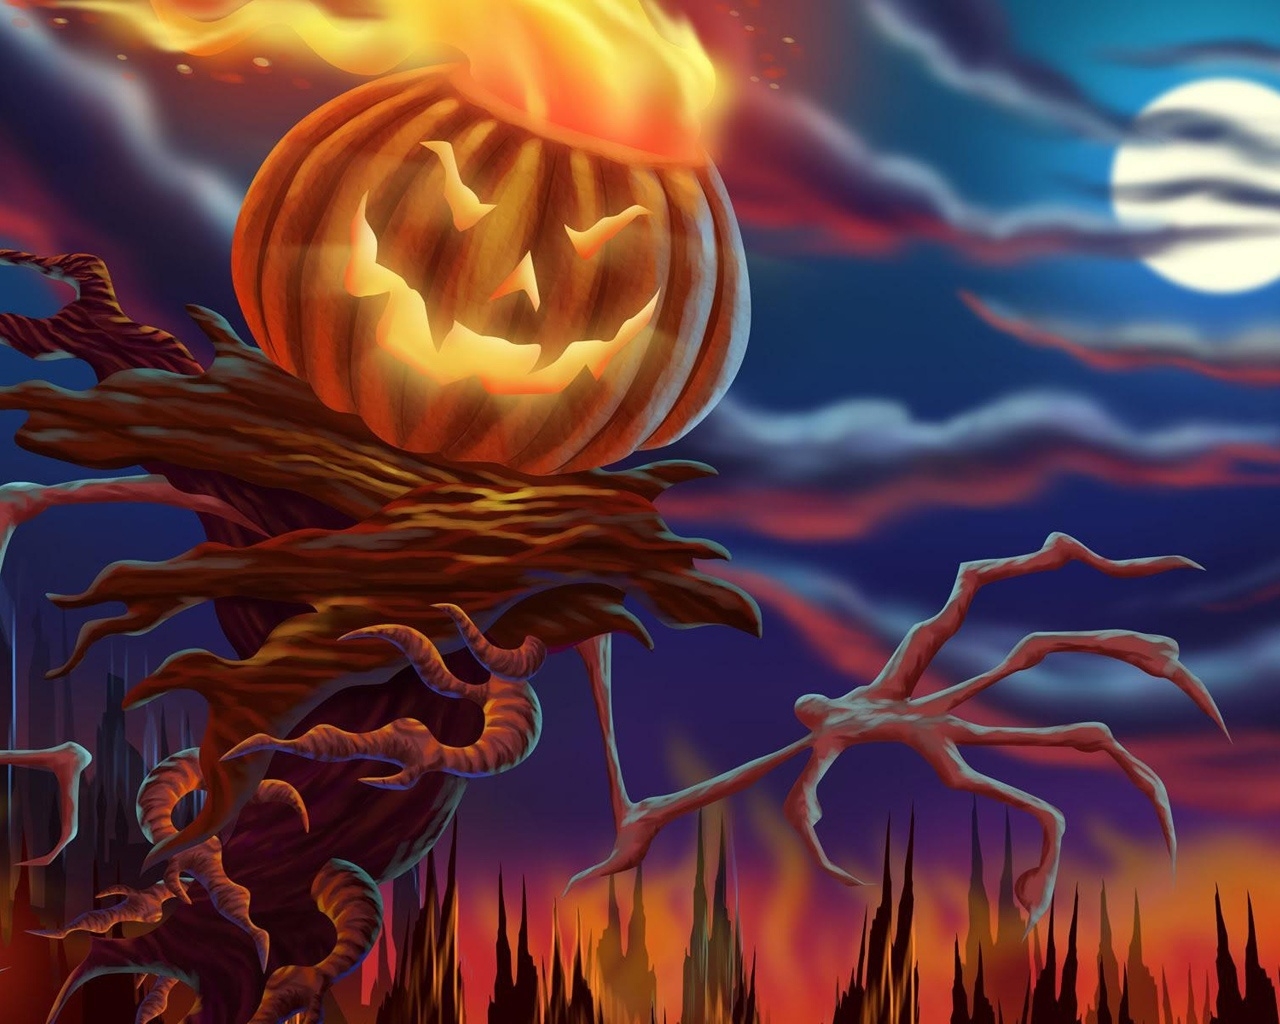 Halloween Digital Illustration for 1280 x 1024 resolution